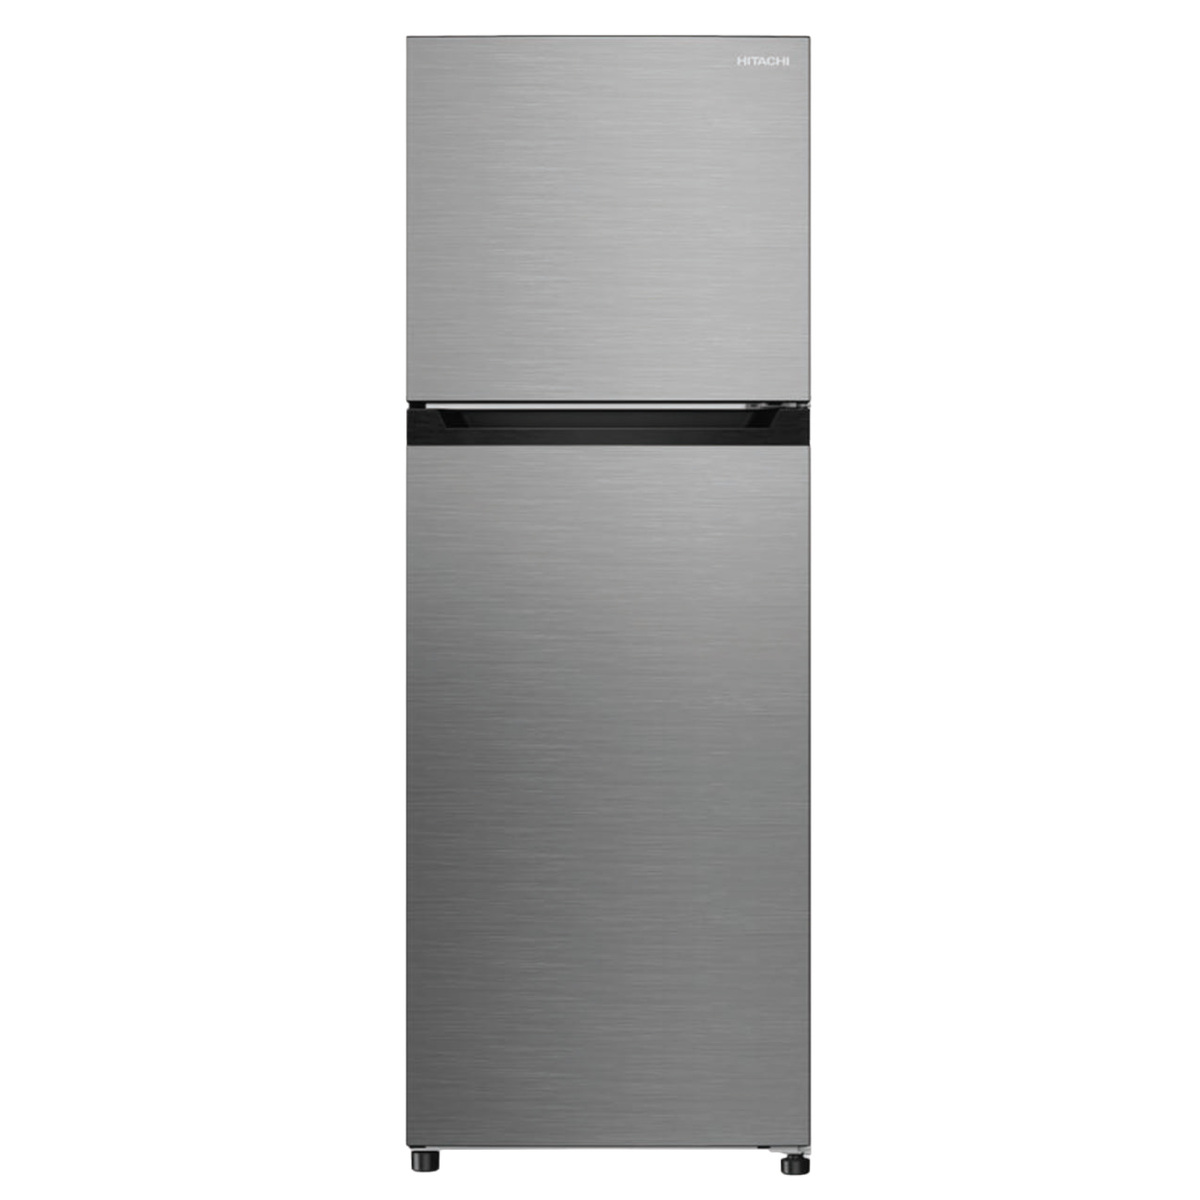 Hitachi Refrigerator HRTN5255MFXGF 330 Litre